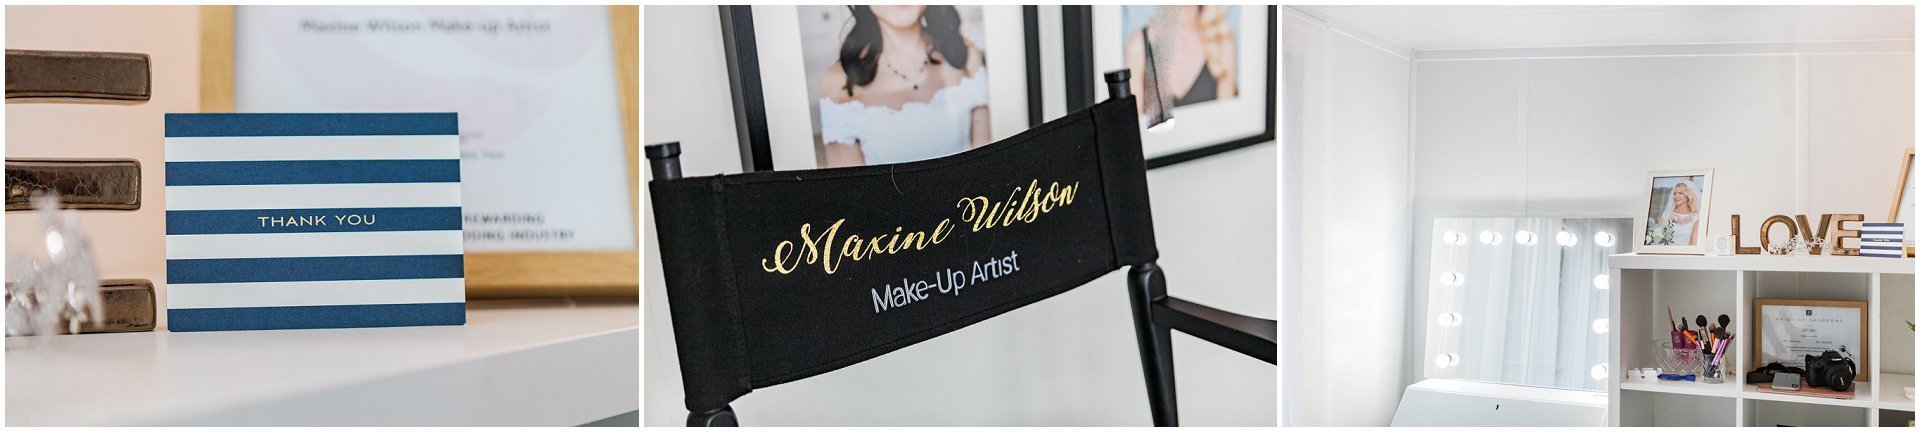 hair and makeup artist Maxine Wilson's studio, images by London branding photographer AKP Branding Stories